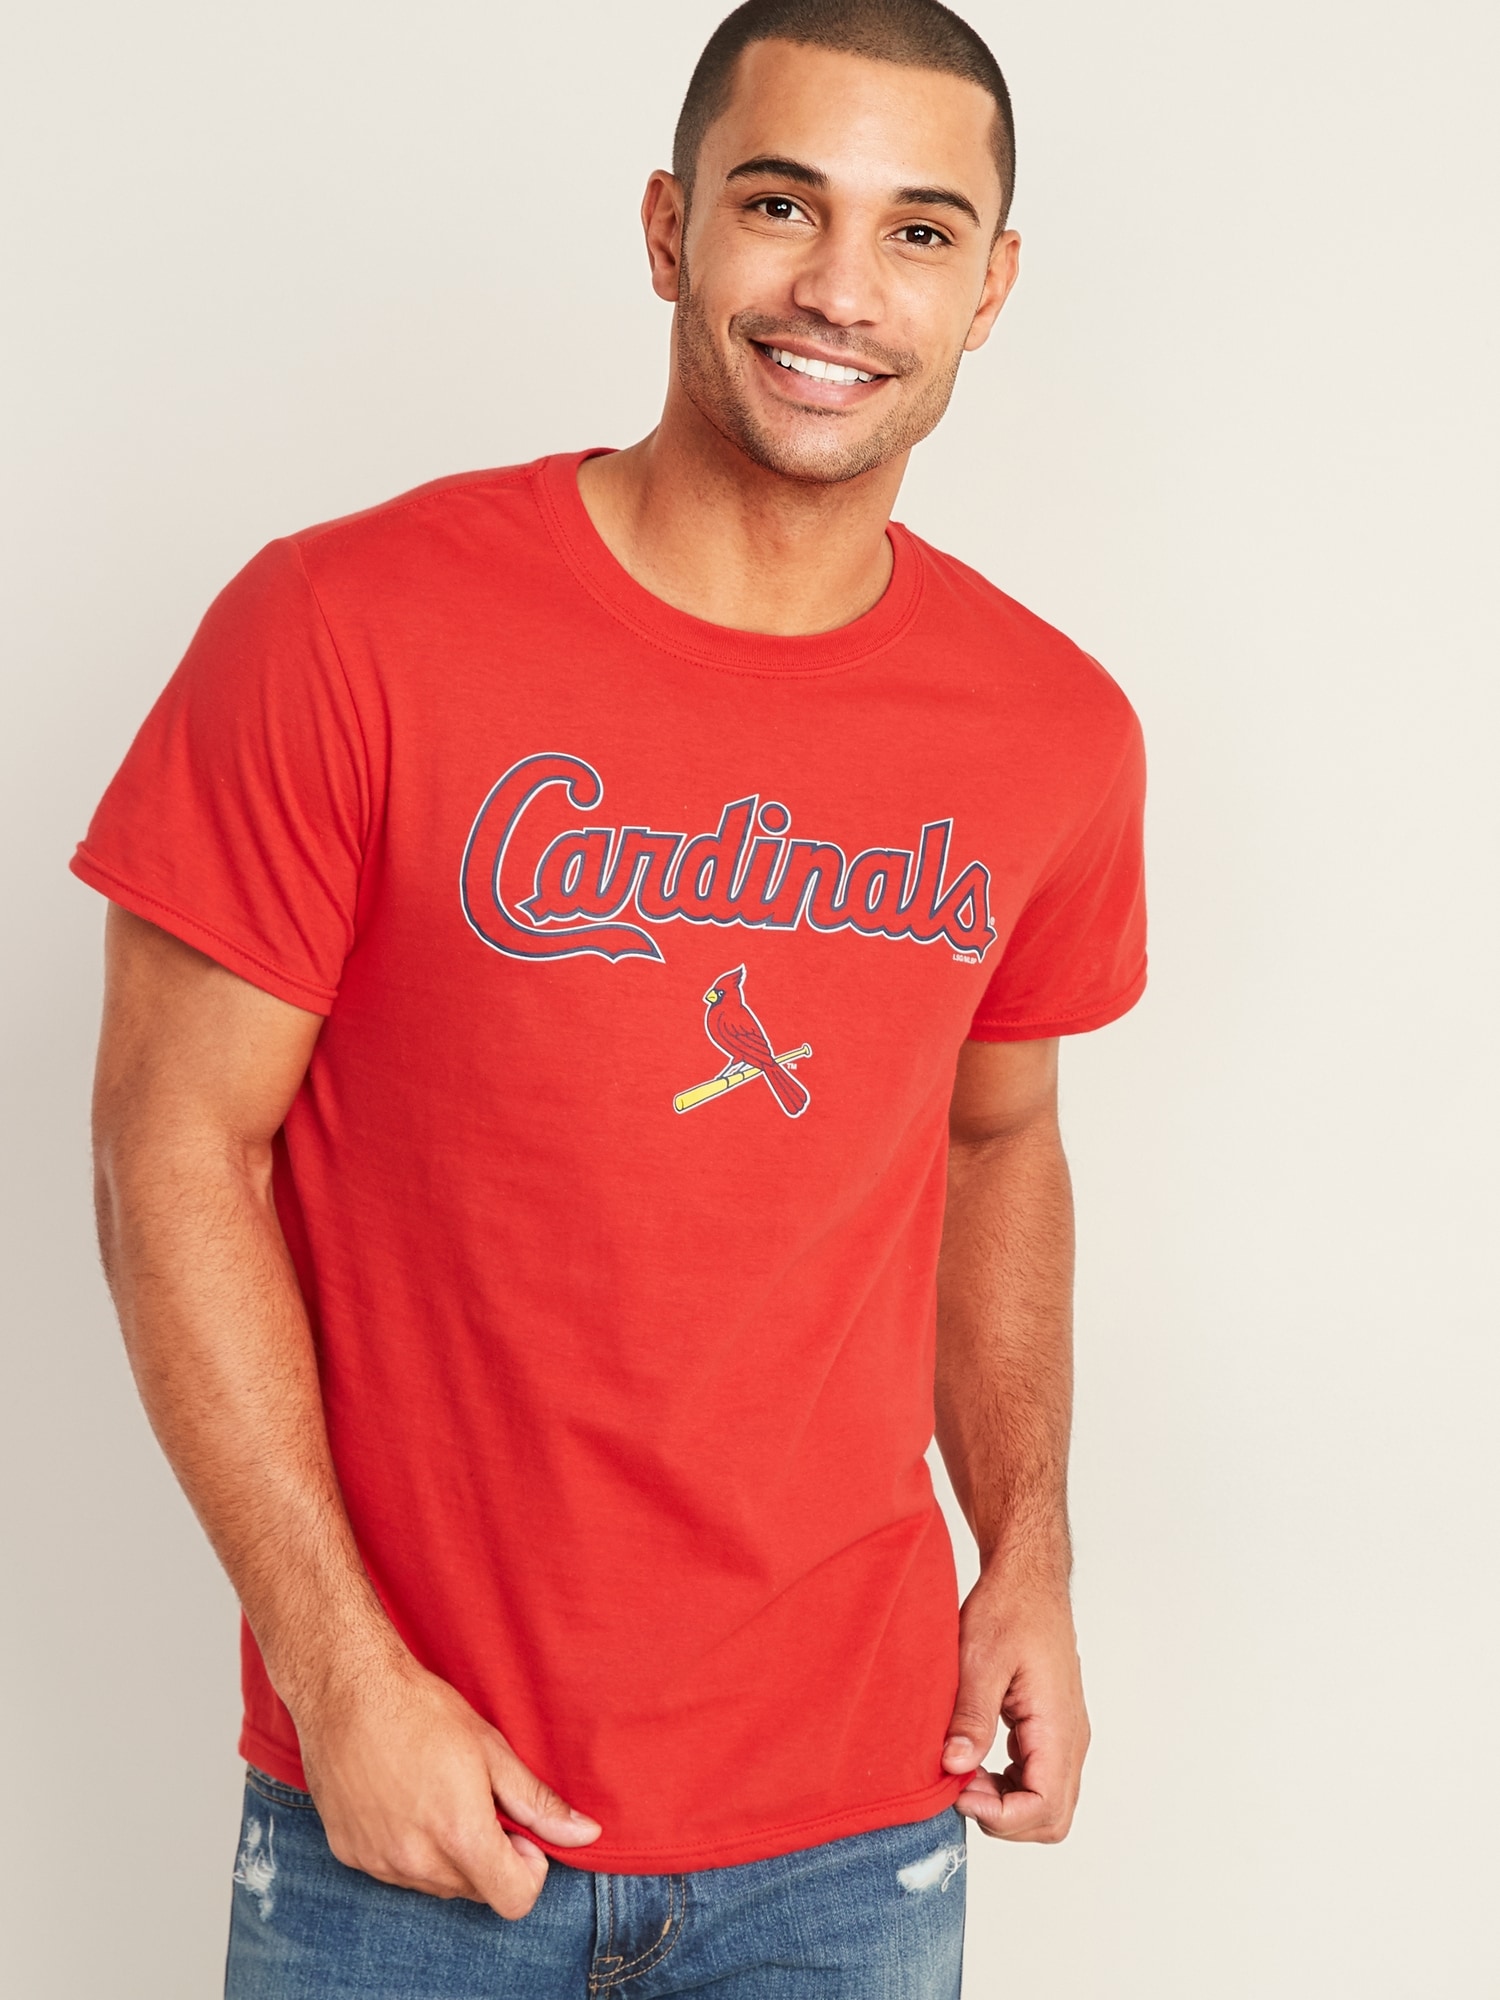 St Louis Cardinals T Shirt Mens Large Navy Blue Short Sleeve Graphic Tee  MLB